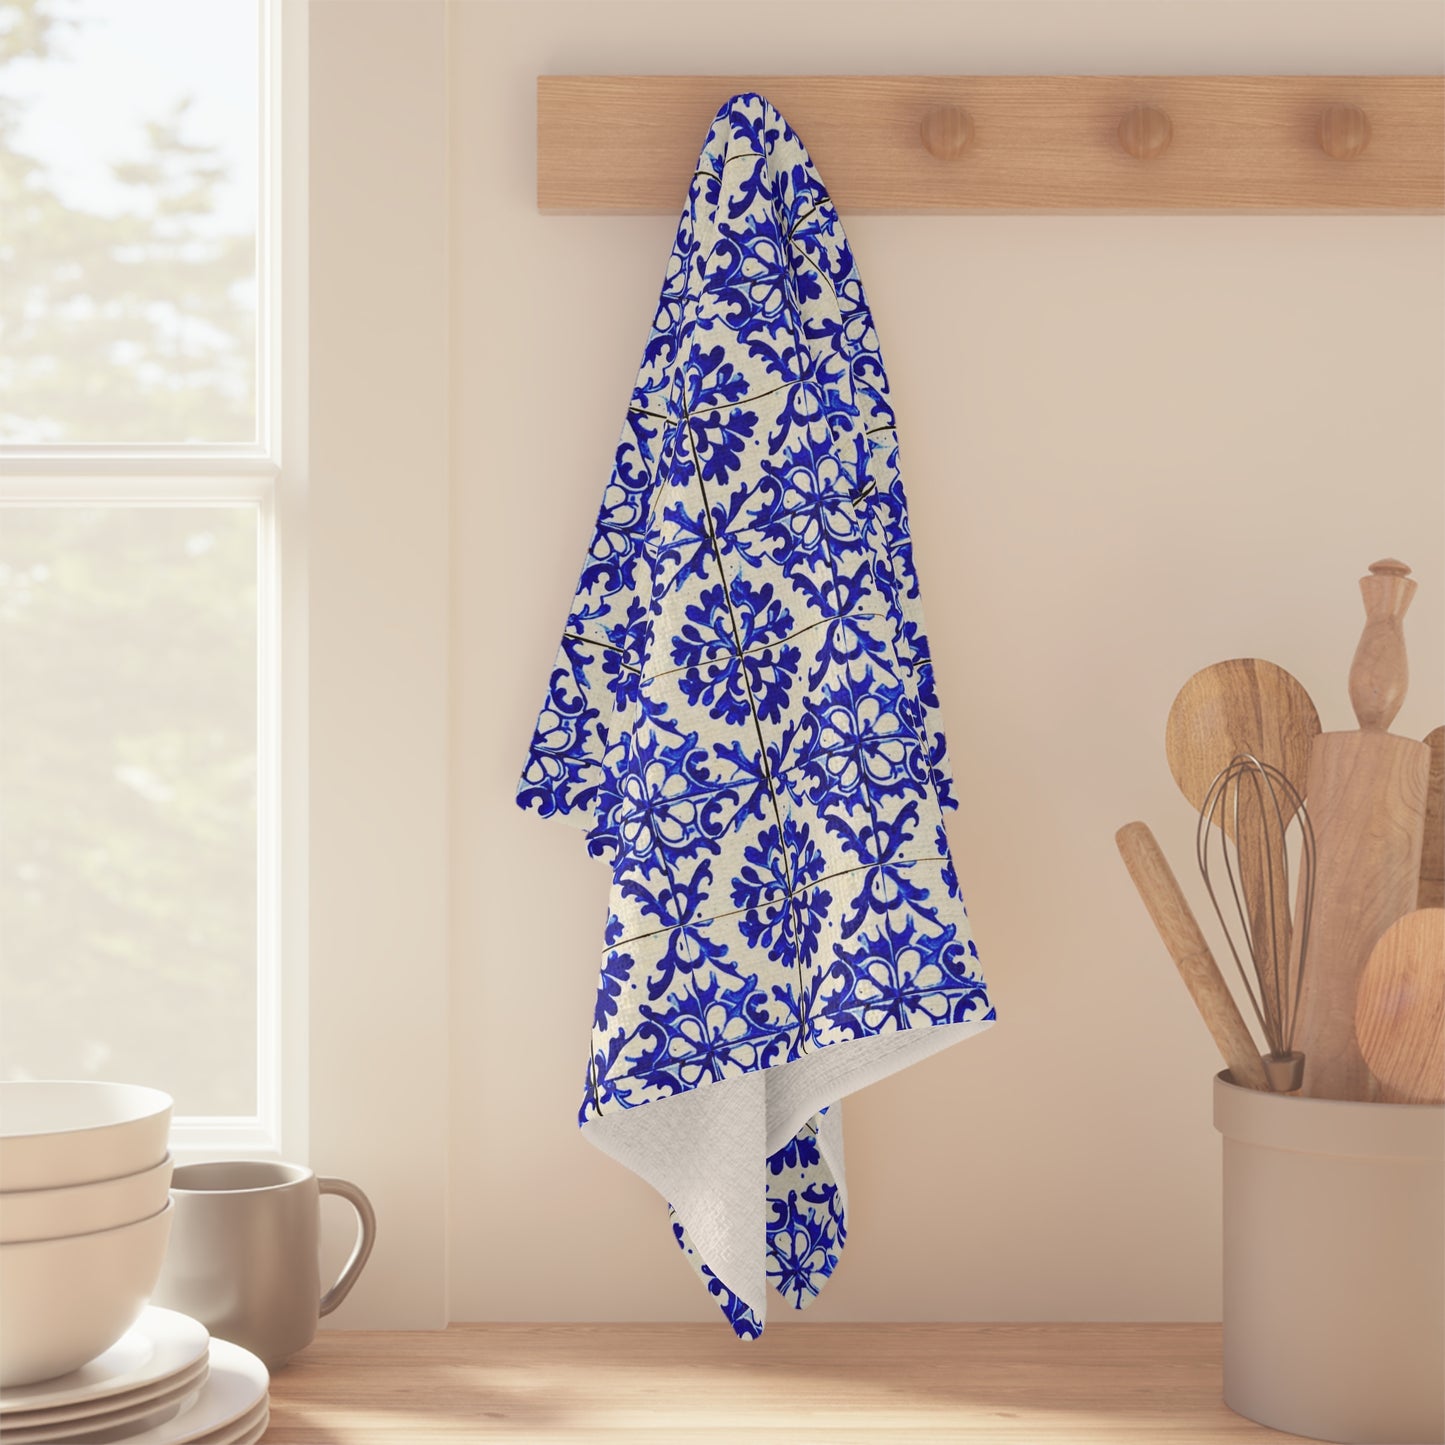 Portuguese Summer Blue and White Floral Antique Tile Microfiber Waffle Tea Towel/Bar Towel